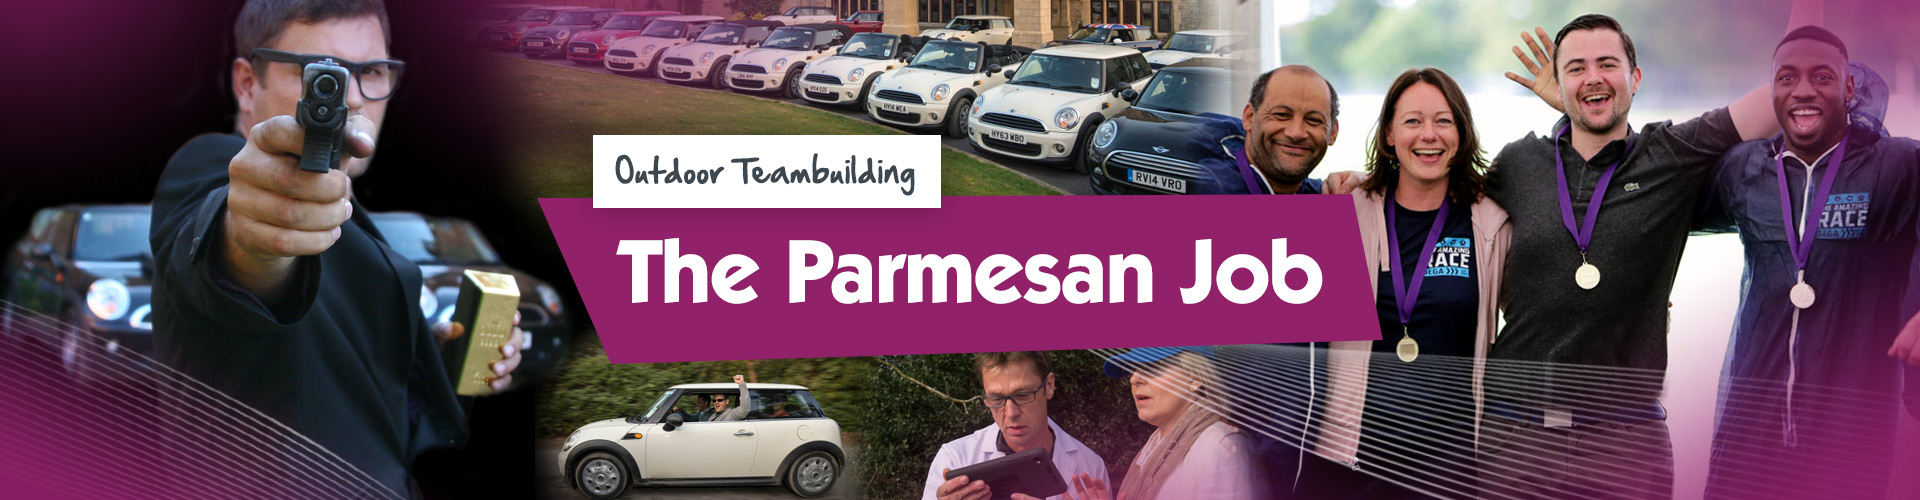 Teambuilding | The Parmesan Job